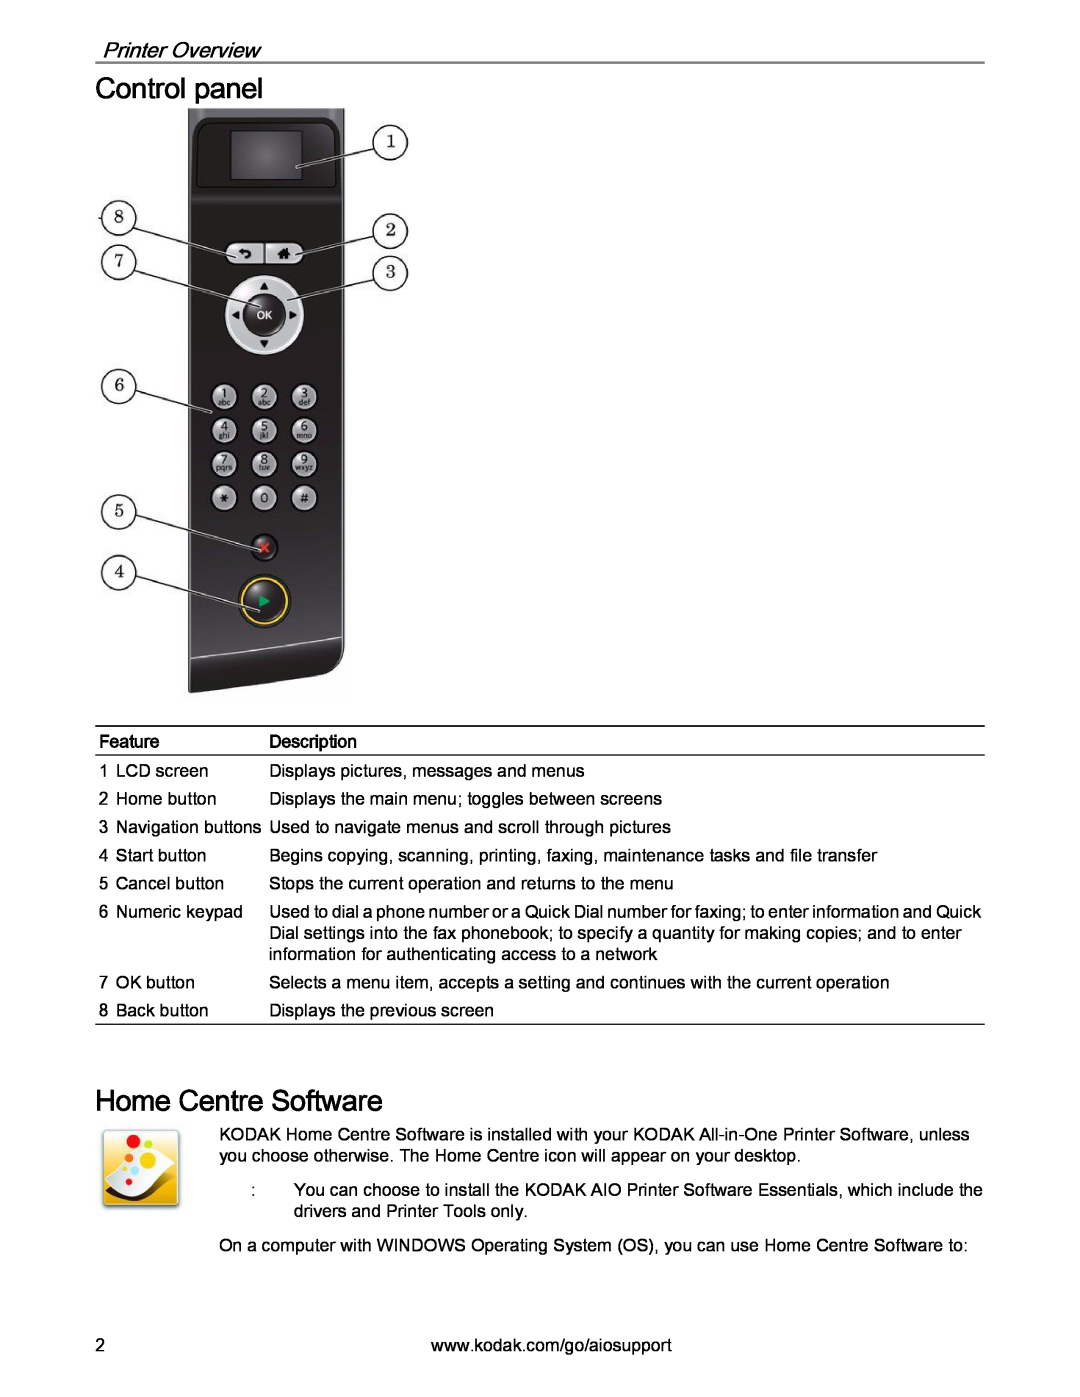 Kodak 2.2 manual Control panel, Home Centre Software, Printer Overview, Feature, Description 